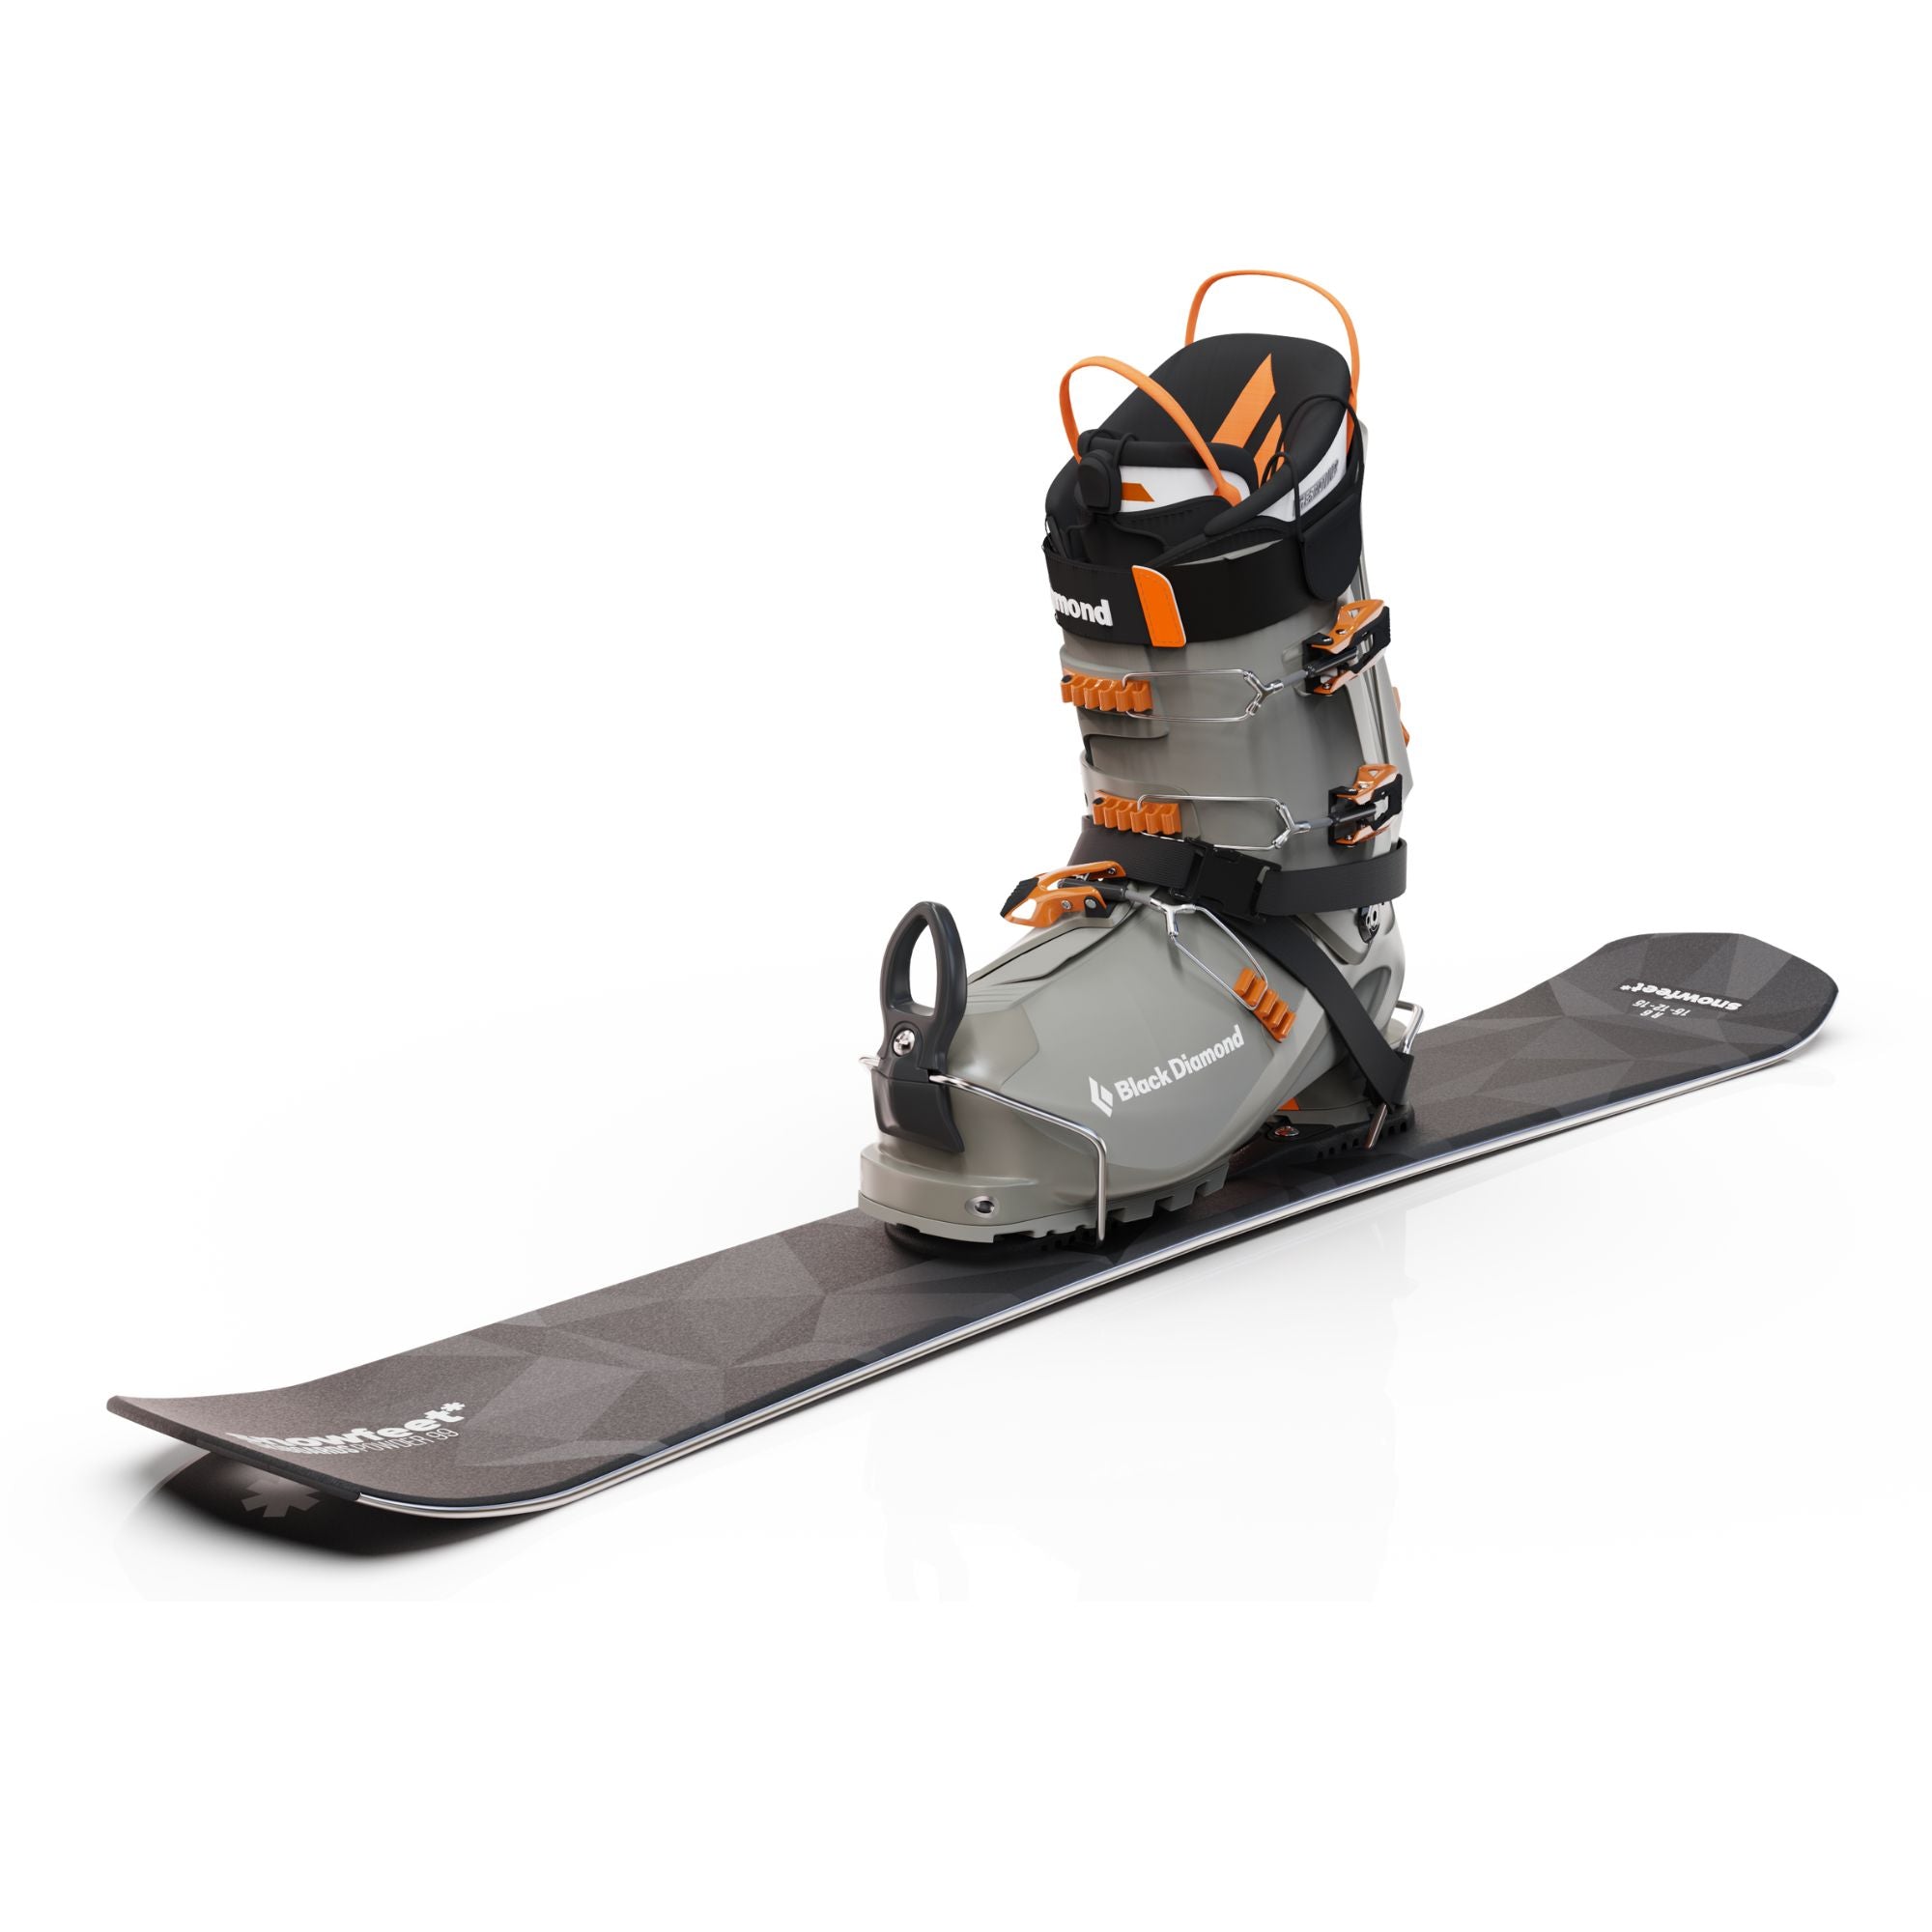 Snowfeet* POWDER Skiblades | 99 CM | Skiboards Snowblades Short Skis - snowfeet*